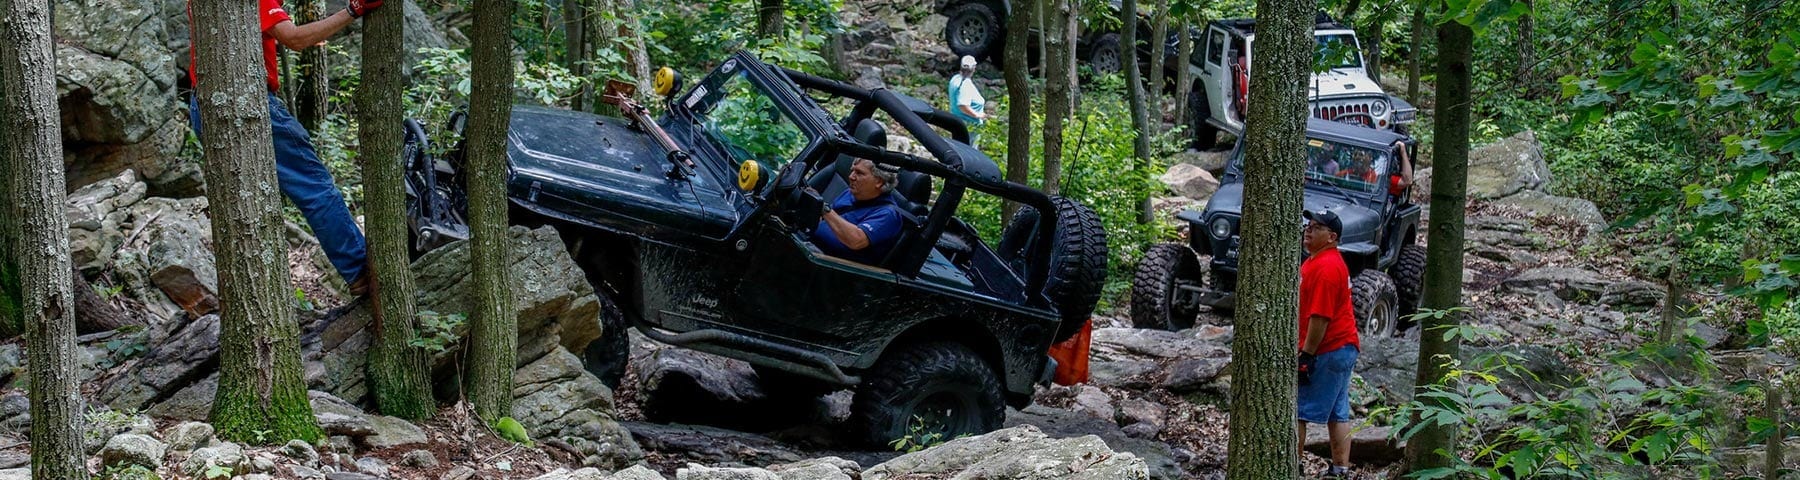 coal mountain jeep trip